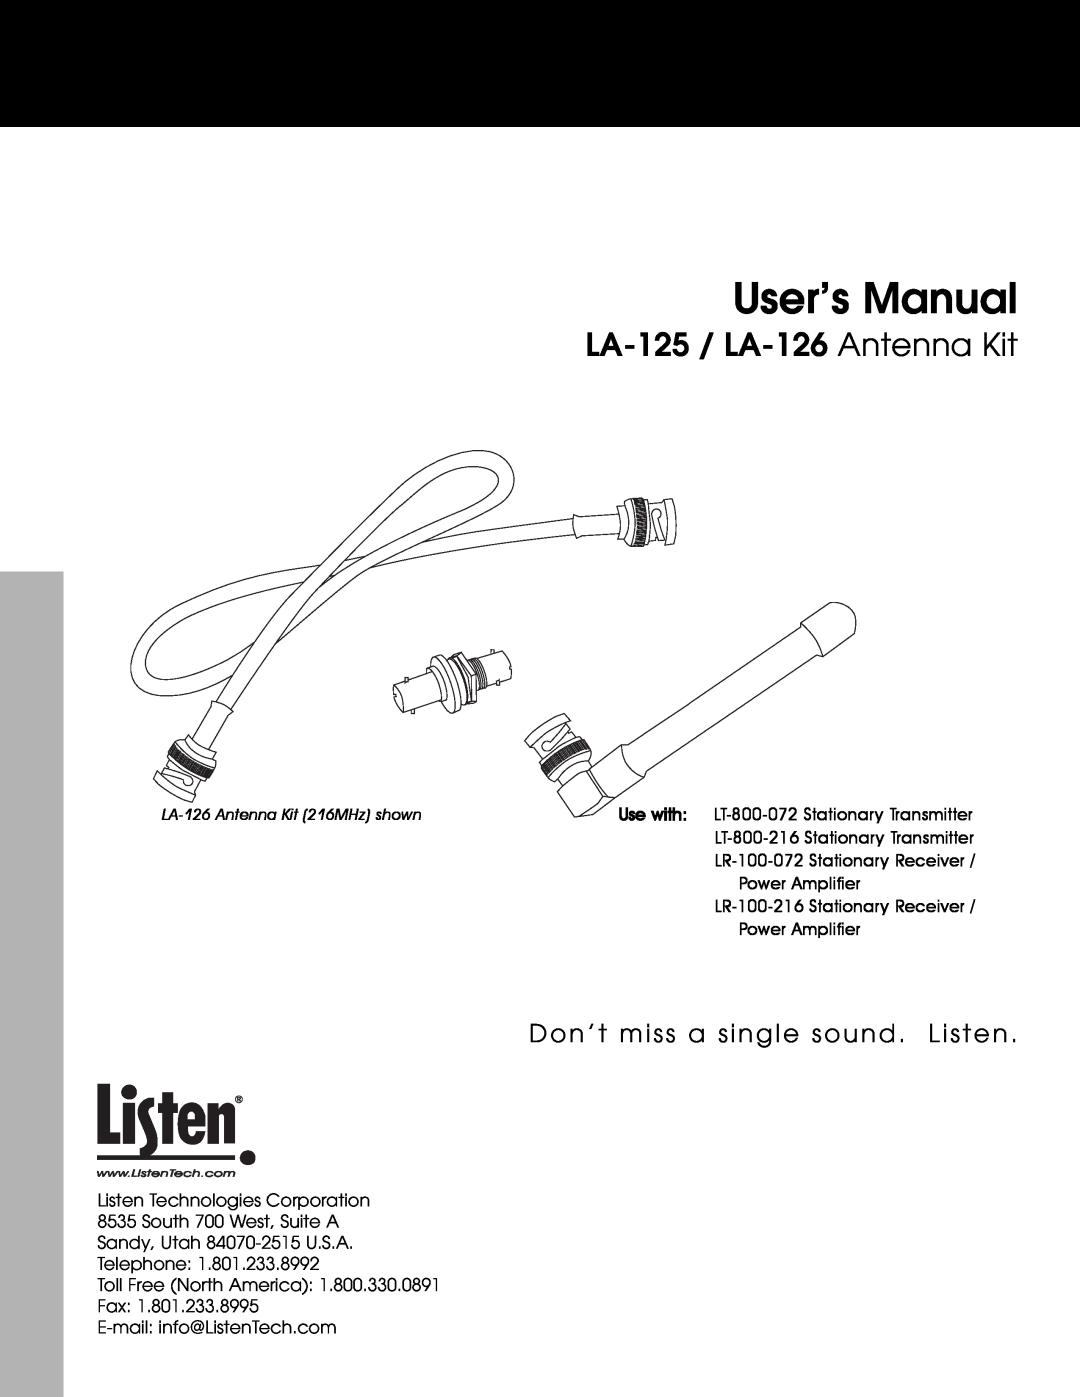 Listen Technologies user manual Don’t miss a single sound . Listen, LA-125 / LA-126Antenna Kit 